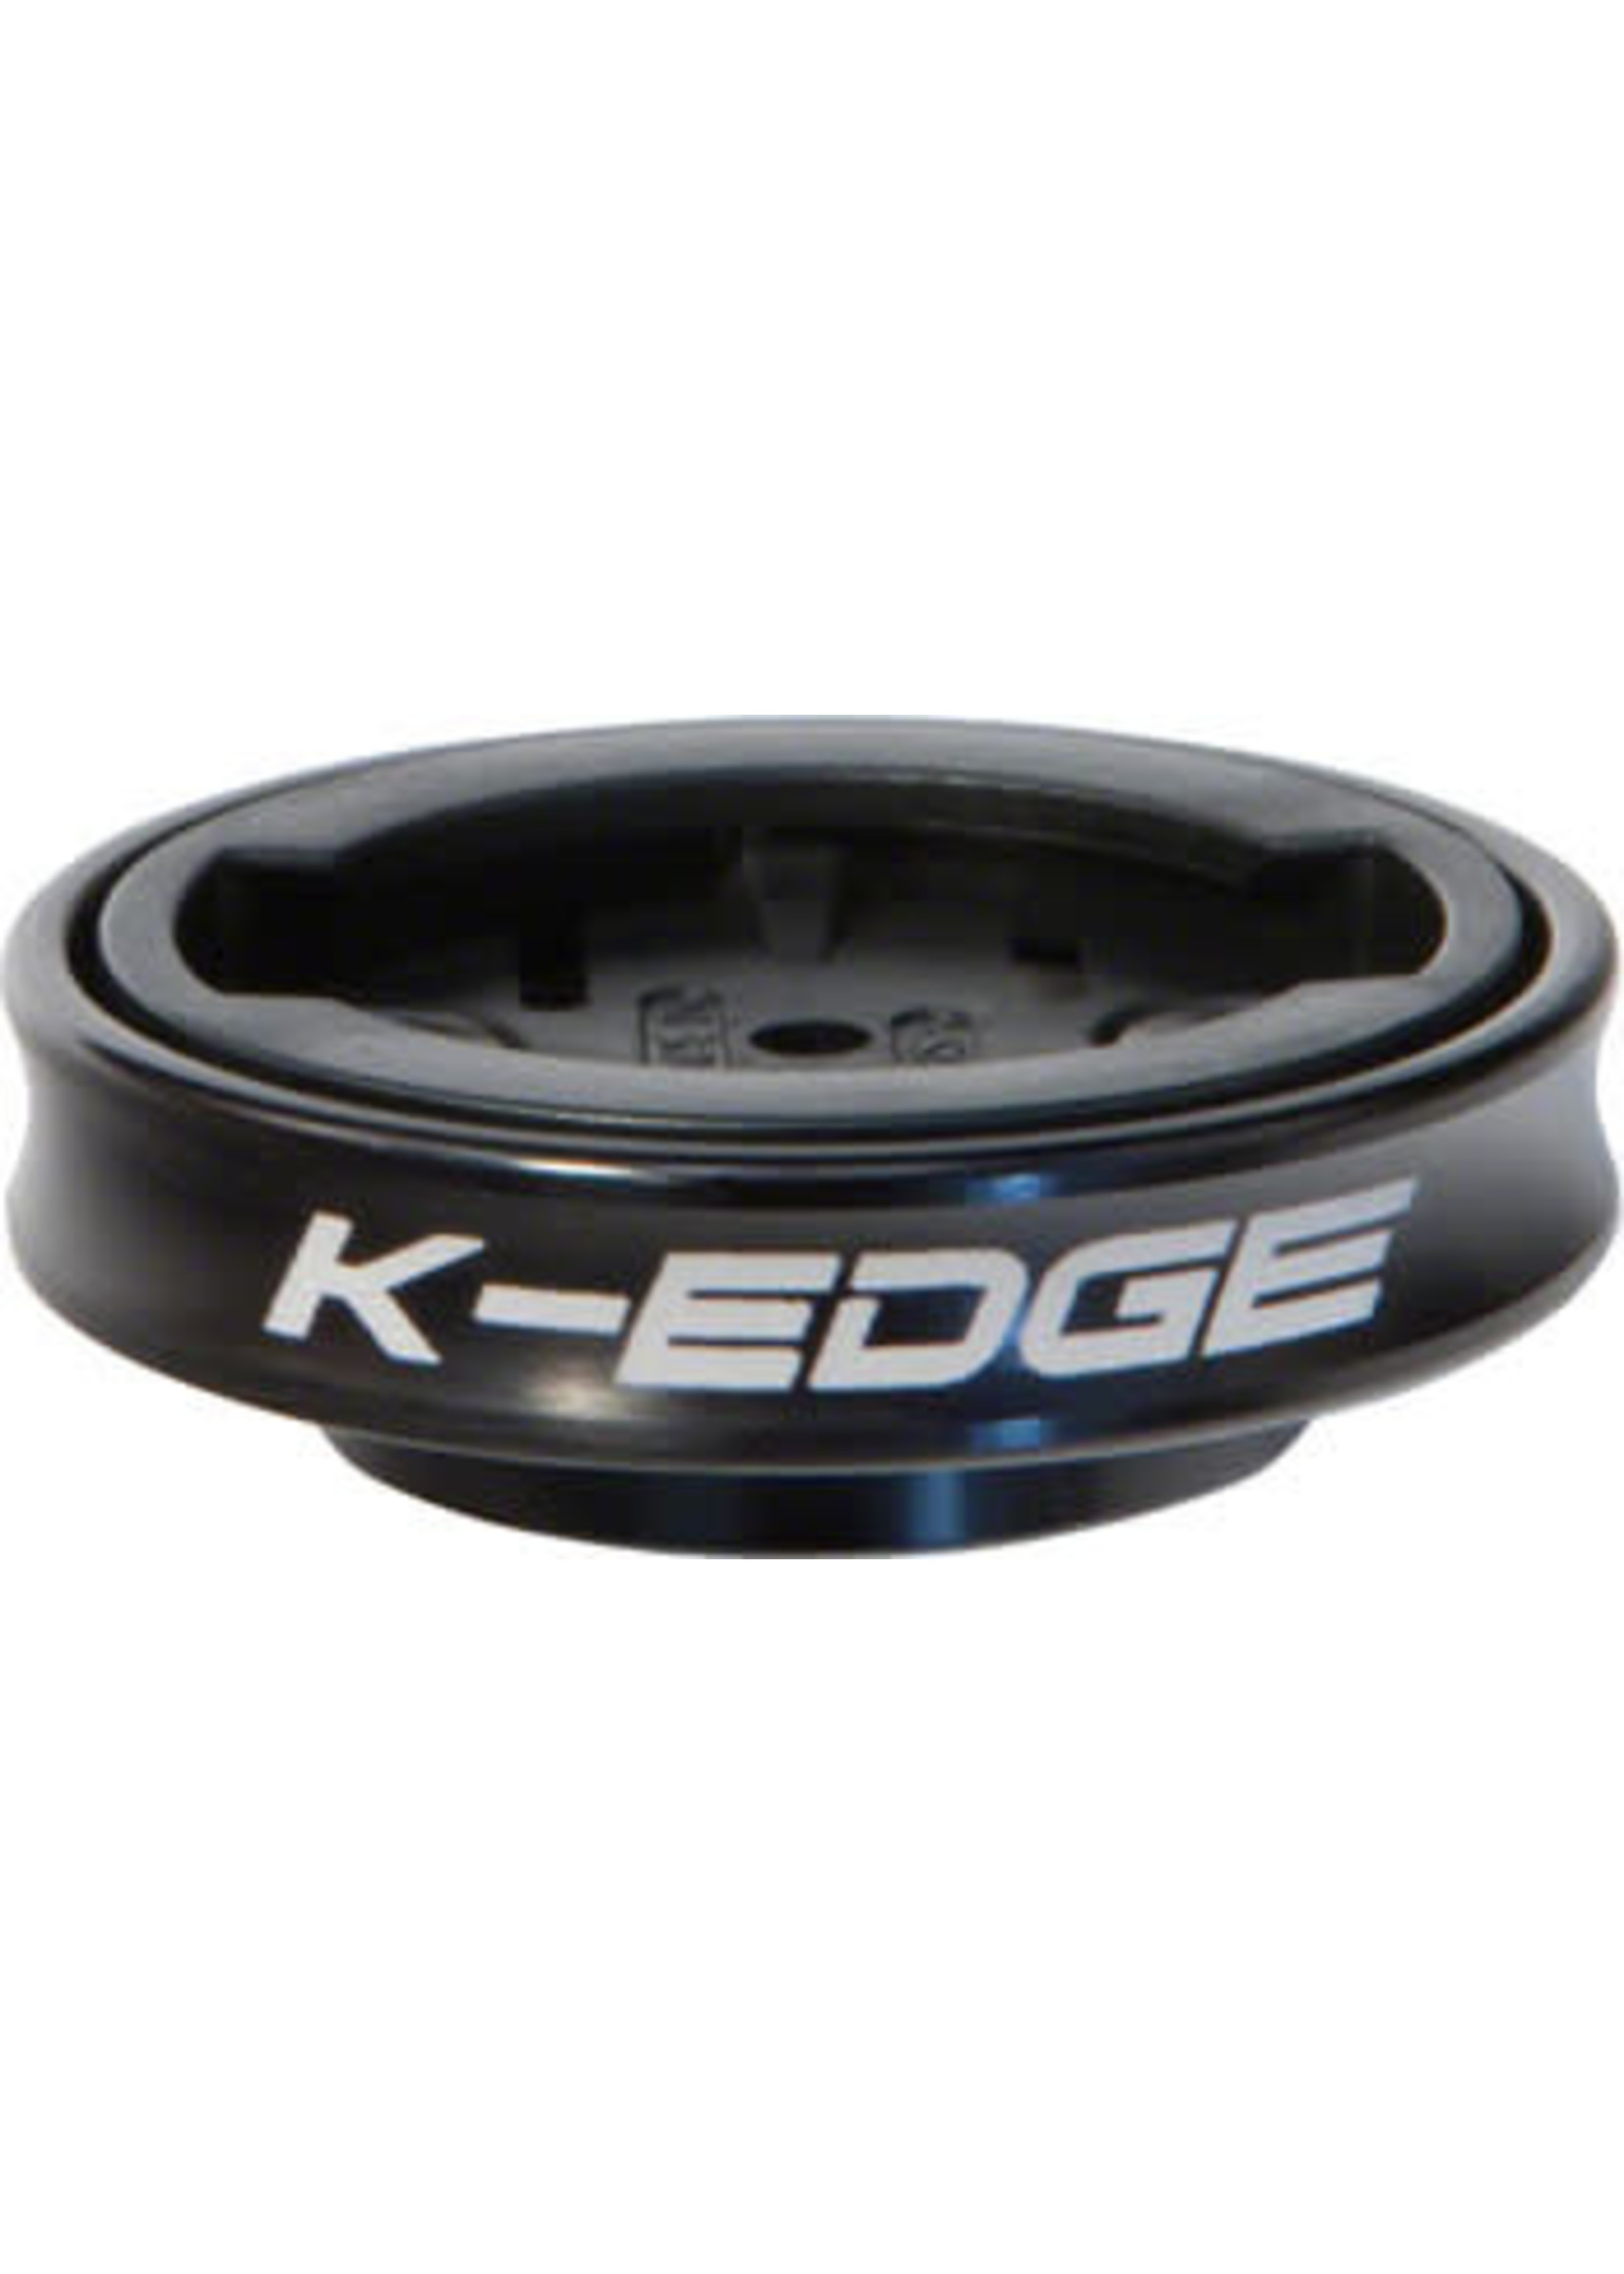 K-Edge K-EDGE Gravity Cap Stem Mount for Garmin Quarter Turn Type Computers